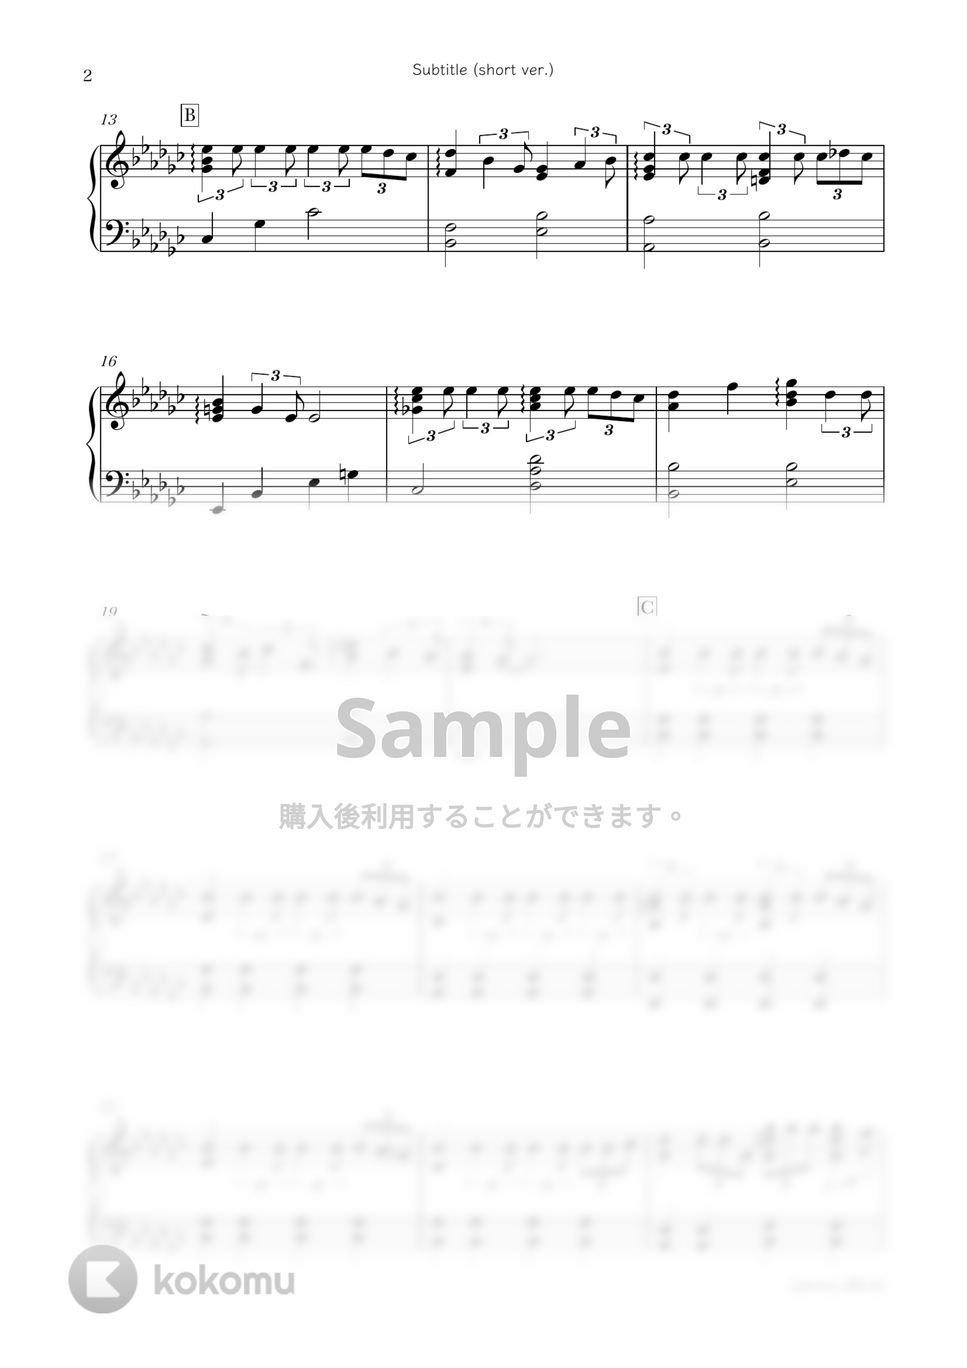 Official髭男dism - Subtitle (ドラマ劇中で流れたピアノver.) by sammy